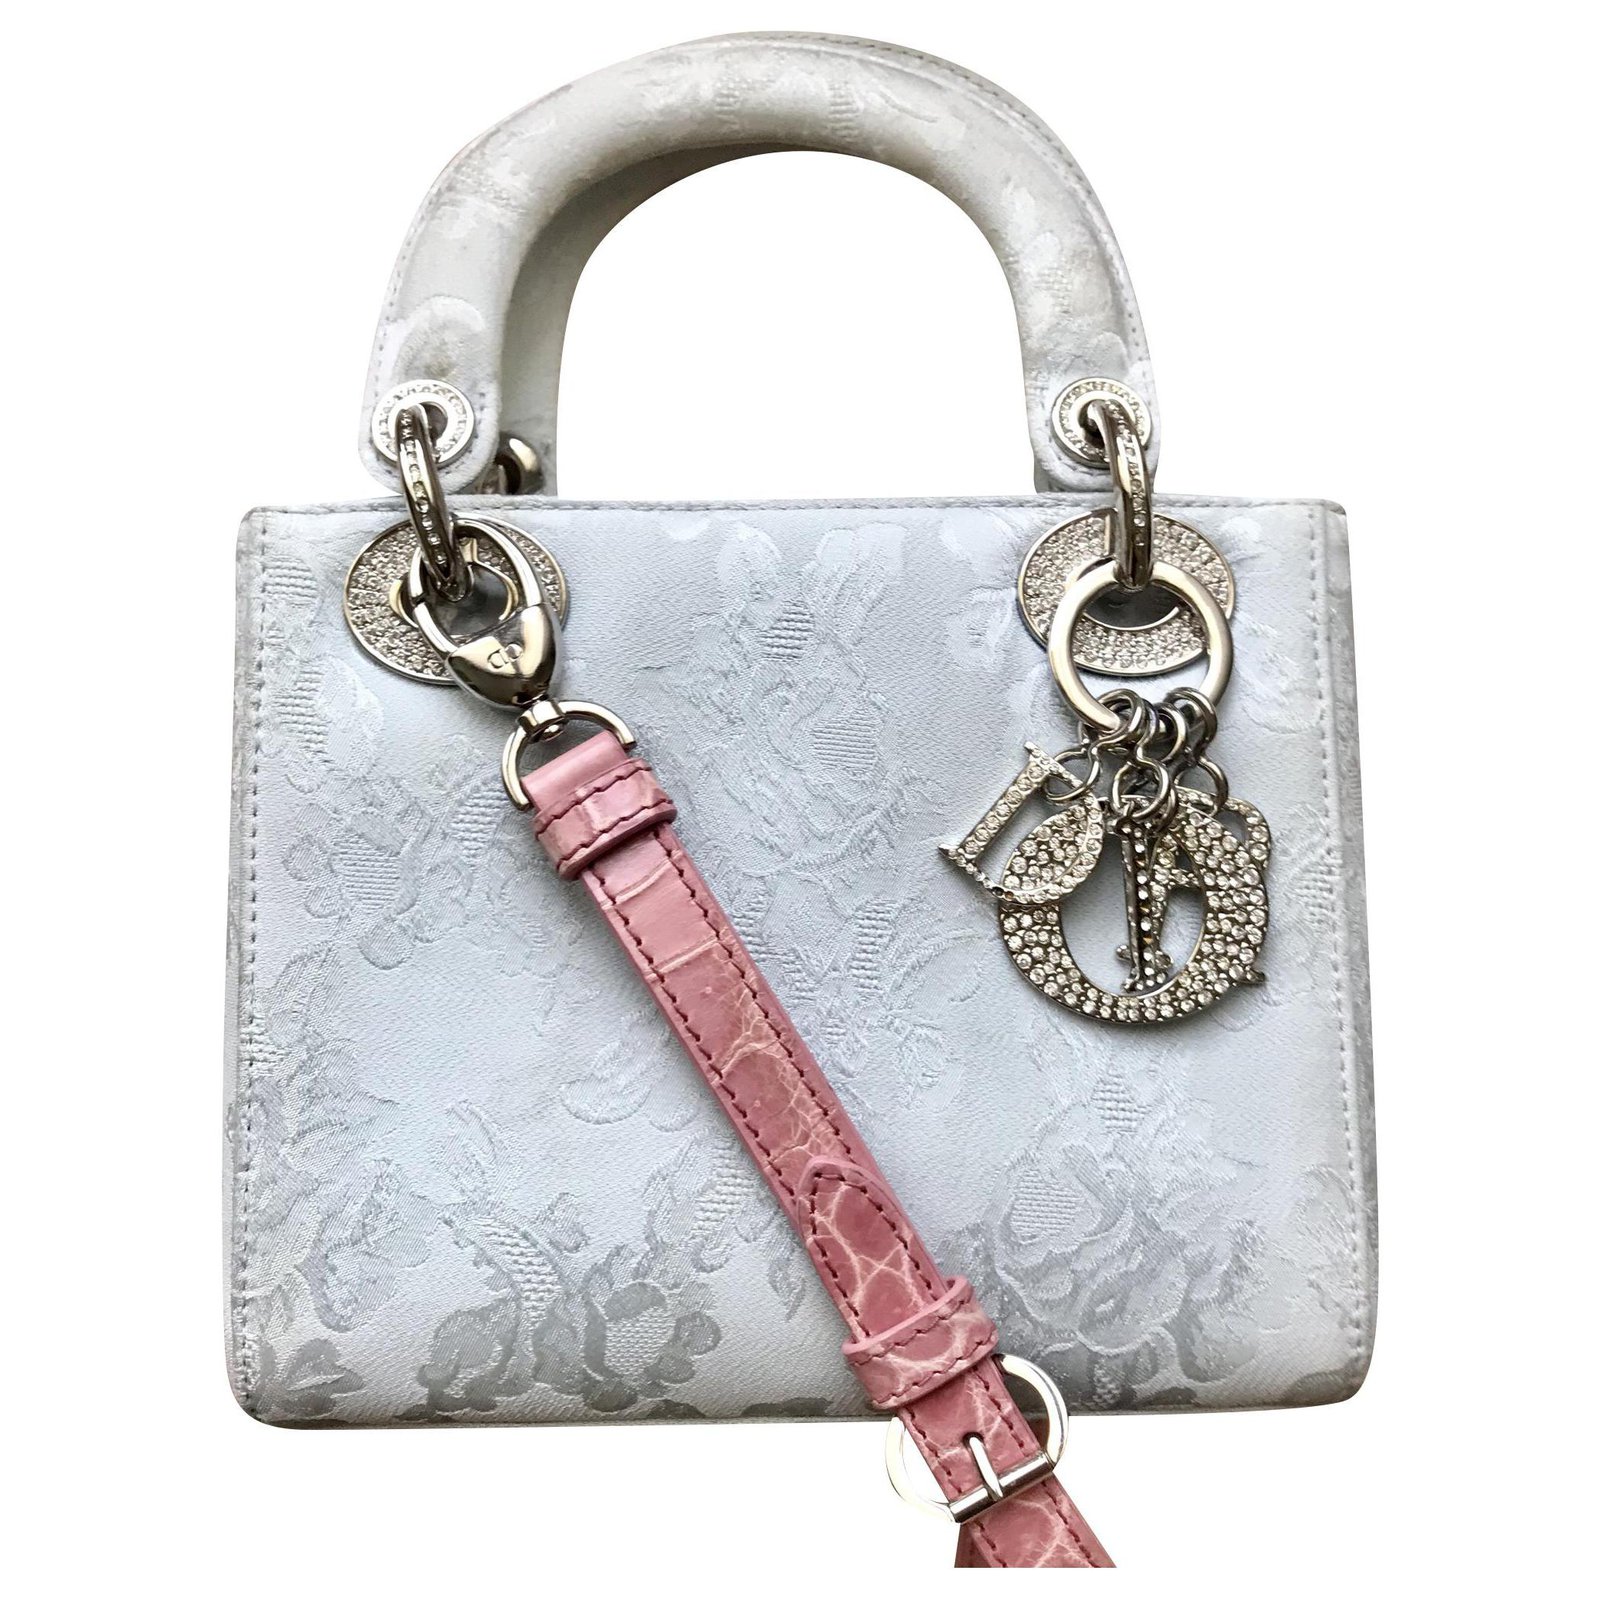 Designer Fashion  Vintage Bags Accessories  More  WGACA  Lady dior mini  Dior Luxury purses